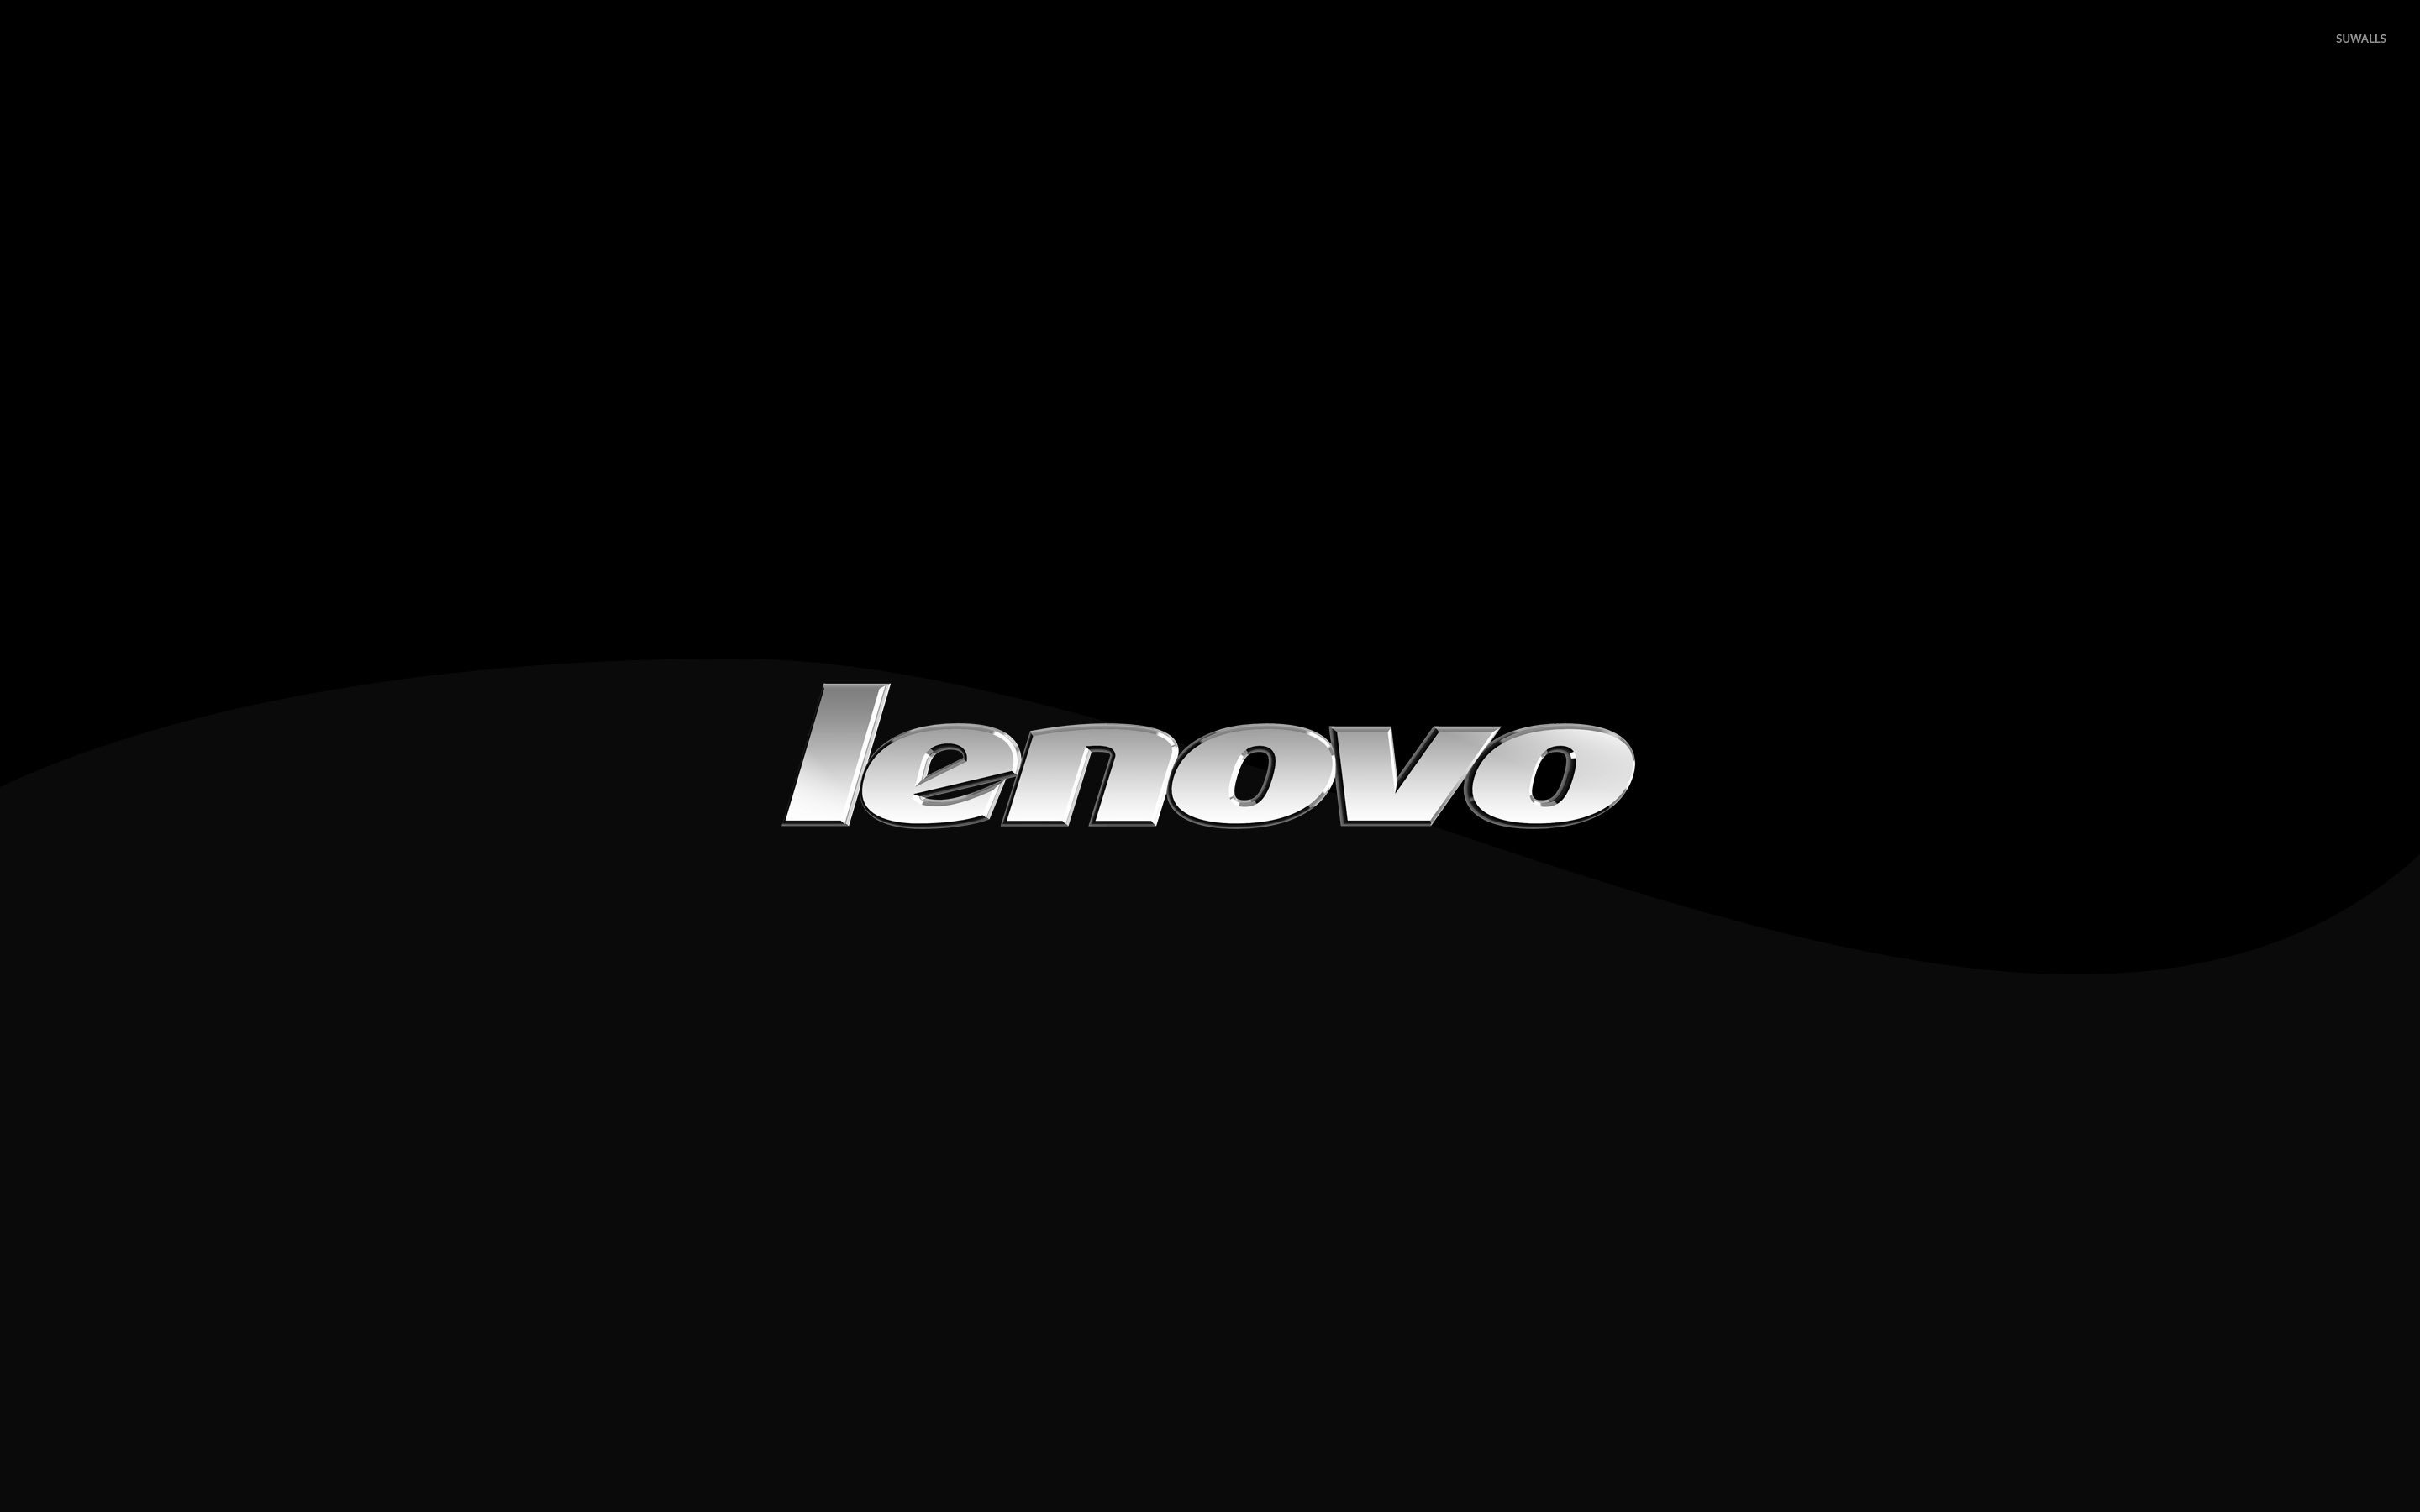 Lenovo wallpaper   Computer wallpapers   26309 2880x1800